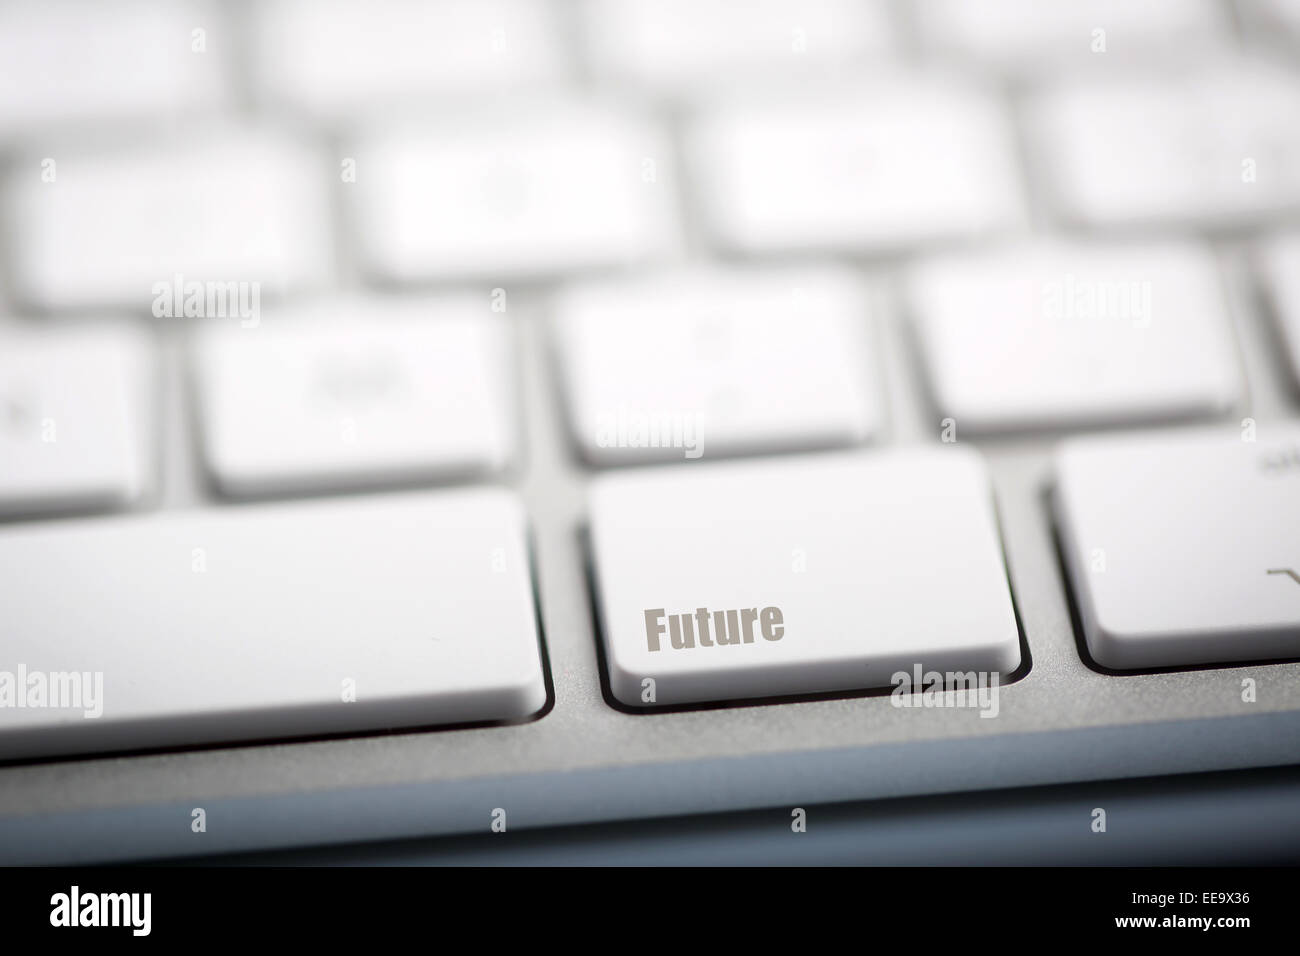 The word 'FUTURE' written on metallic keyboard. Stock Photo